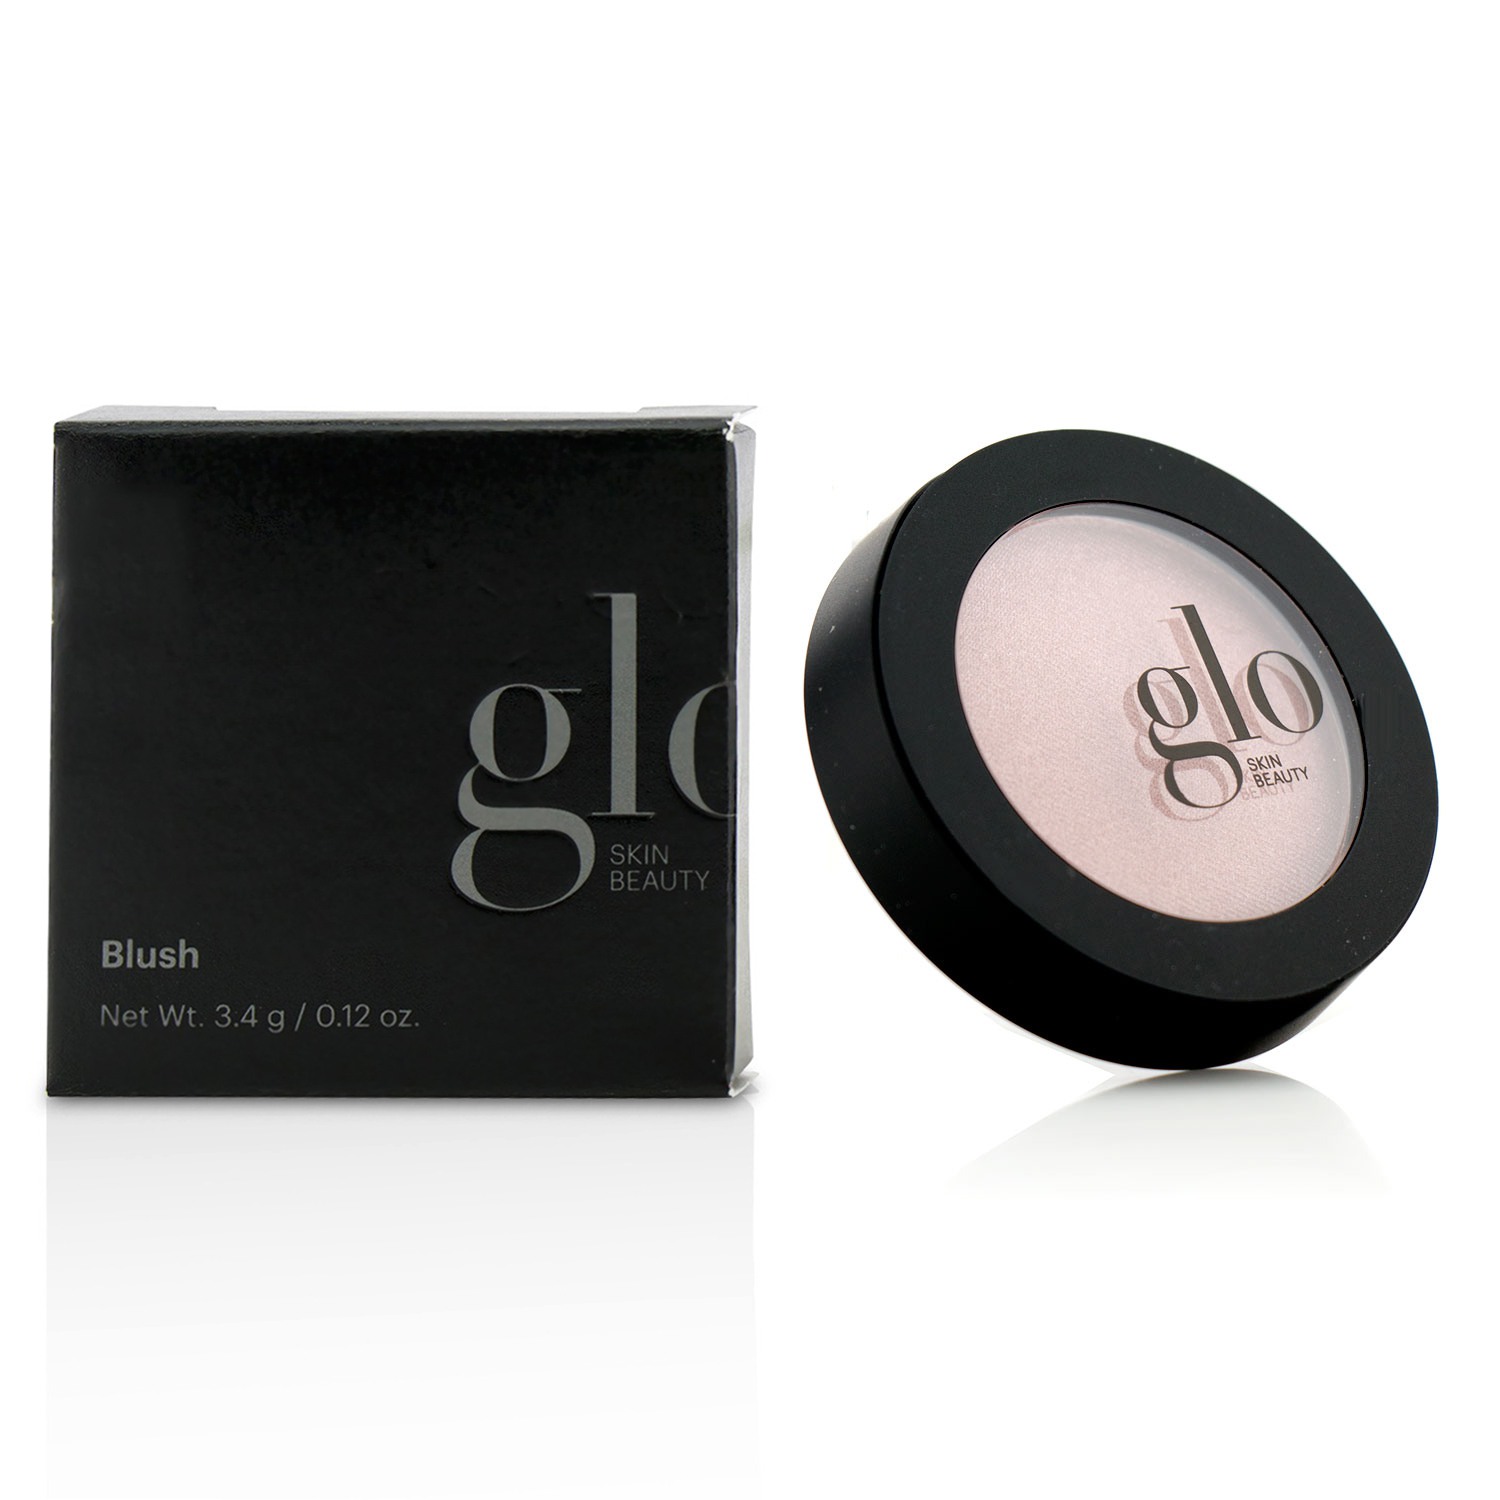 Blush - # Sheer Petal Glo Skin Beauty Image